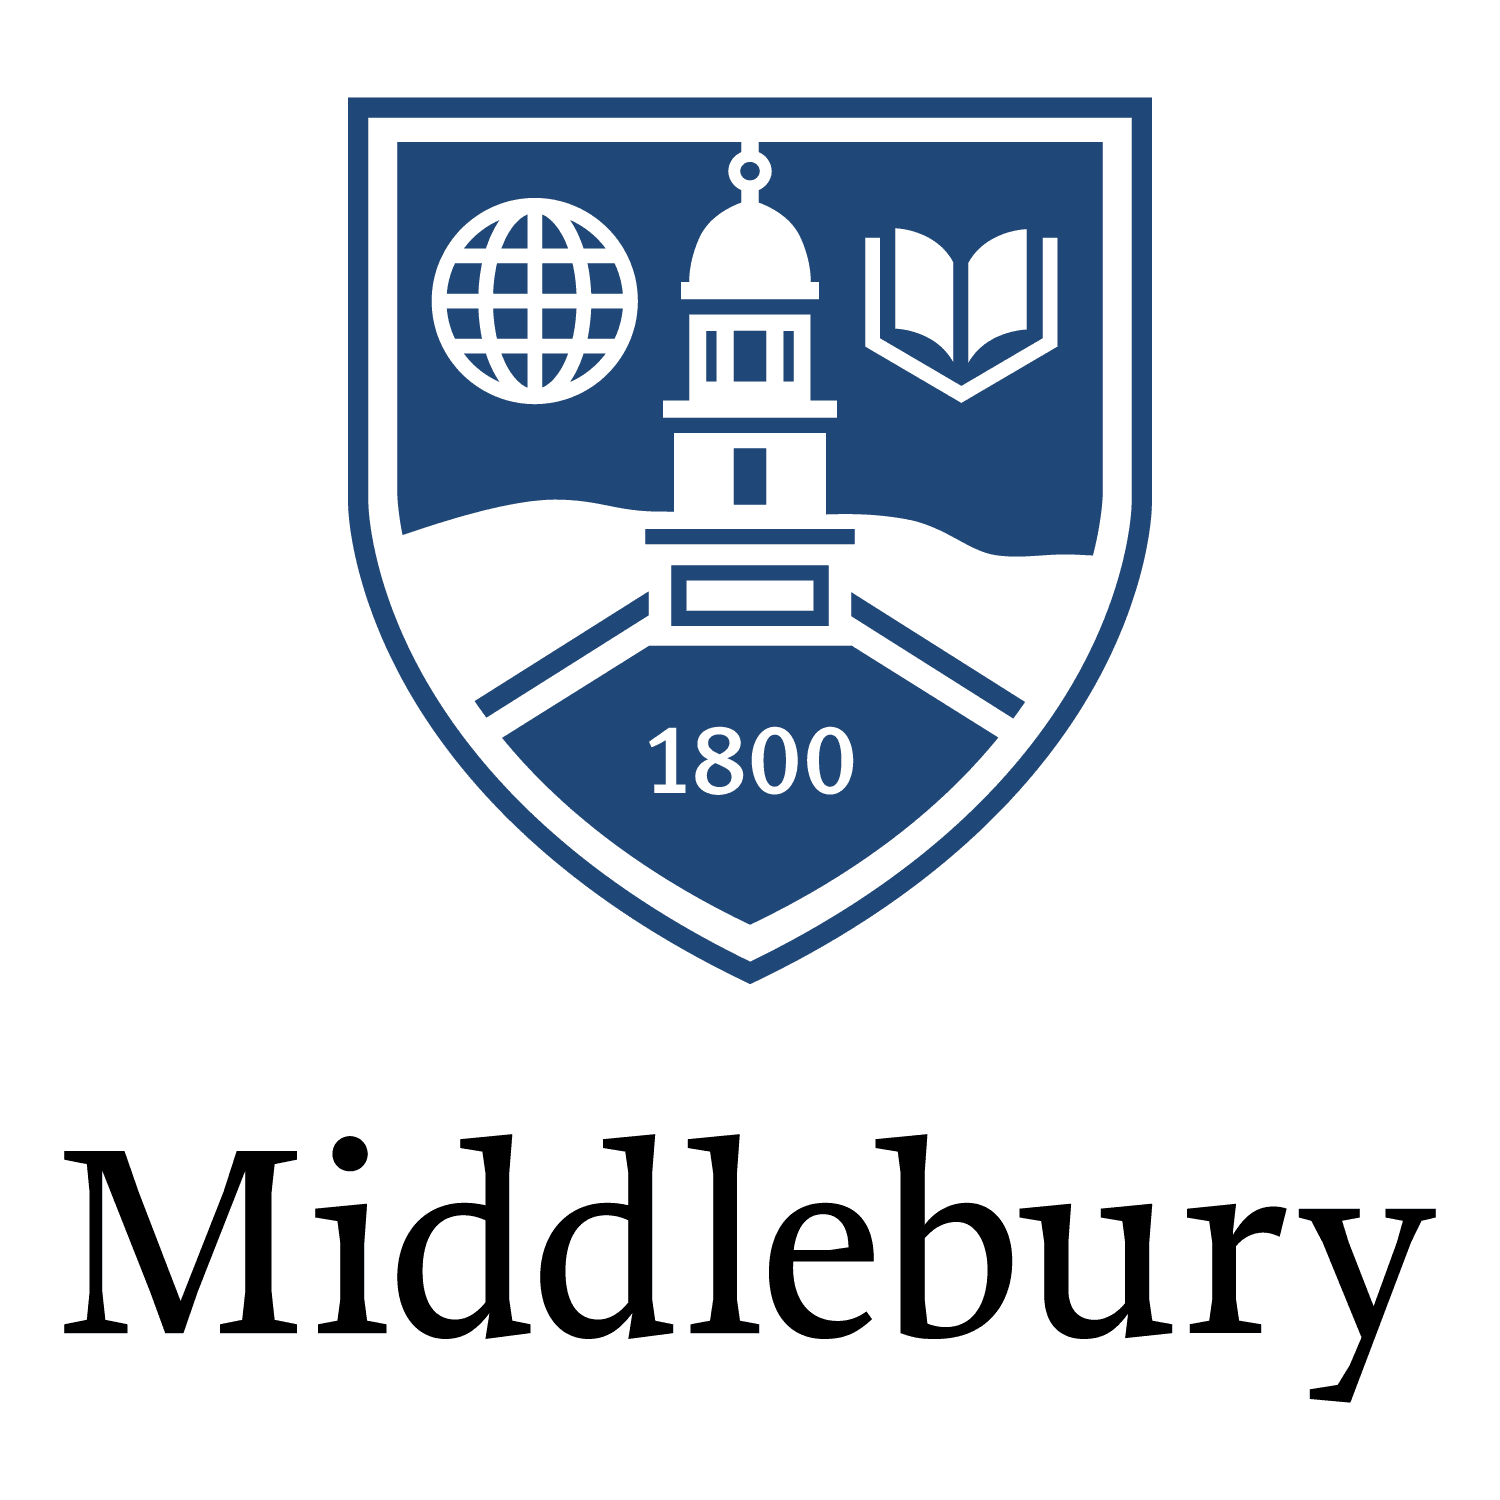 Middlebury College Logo